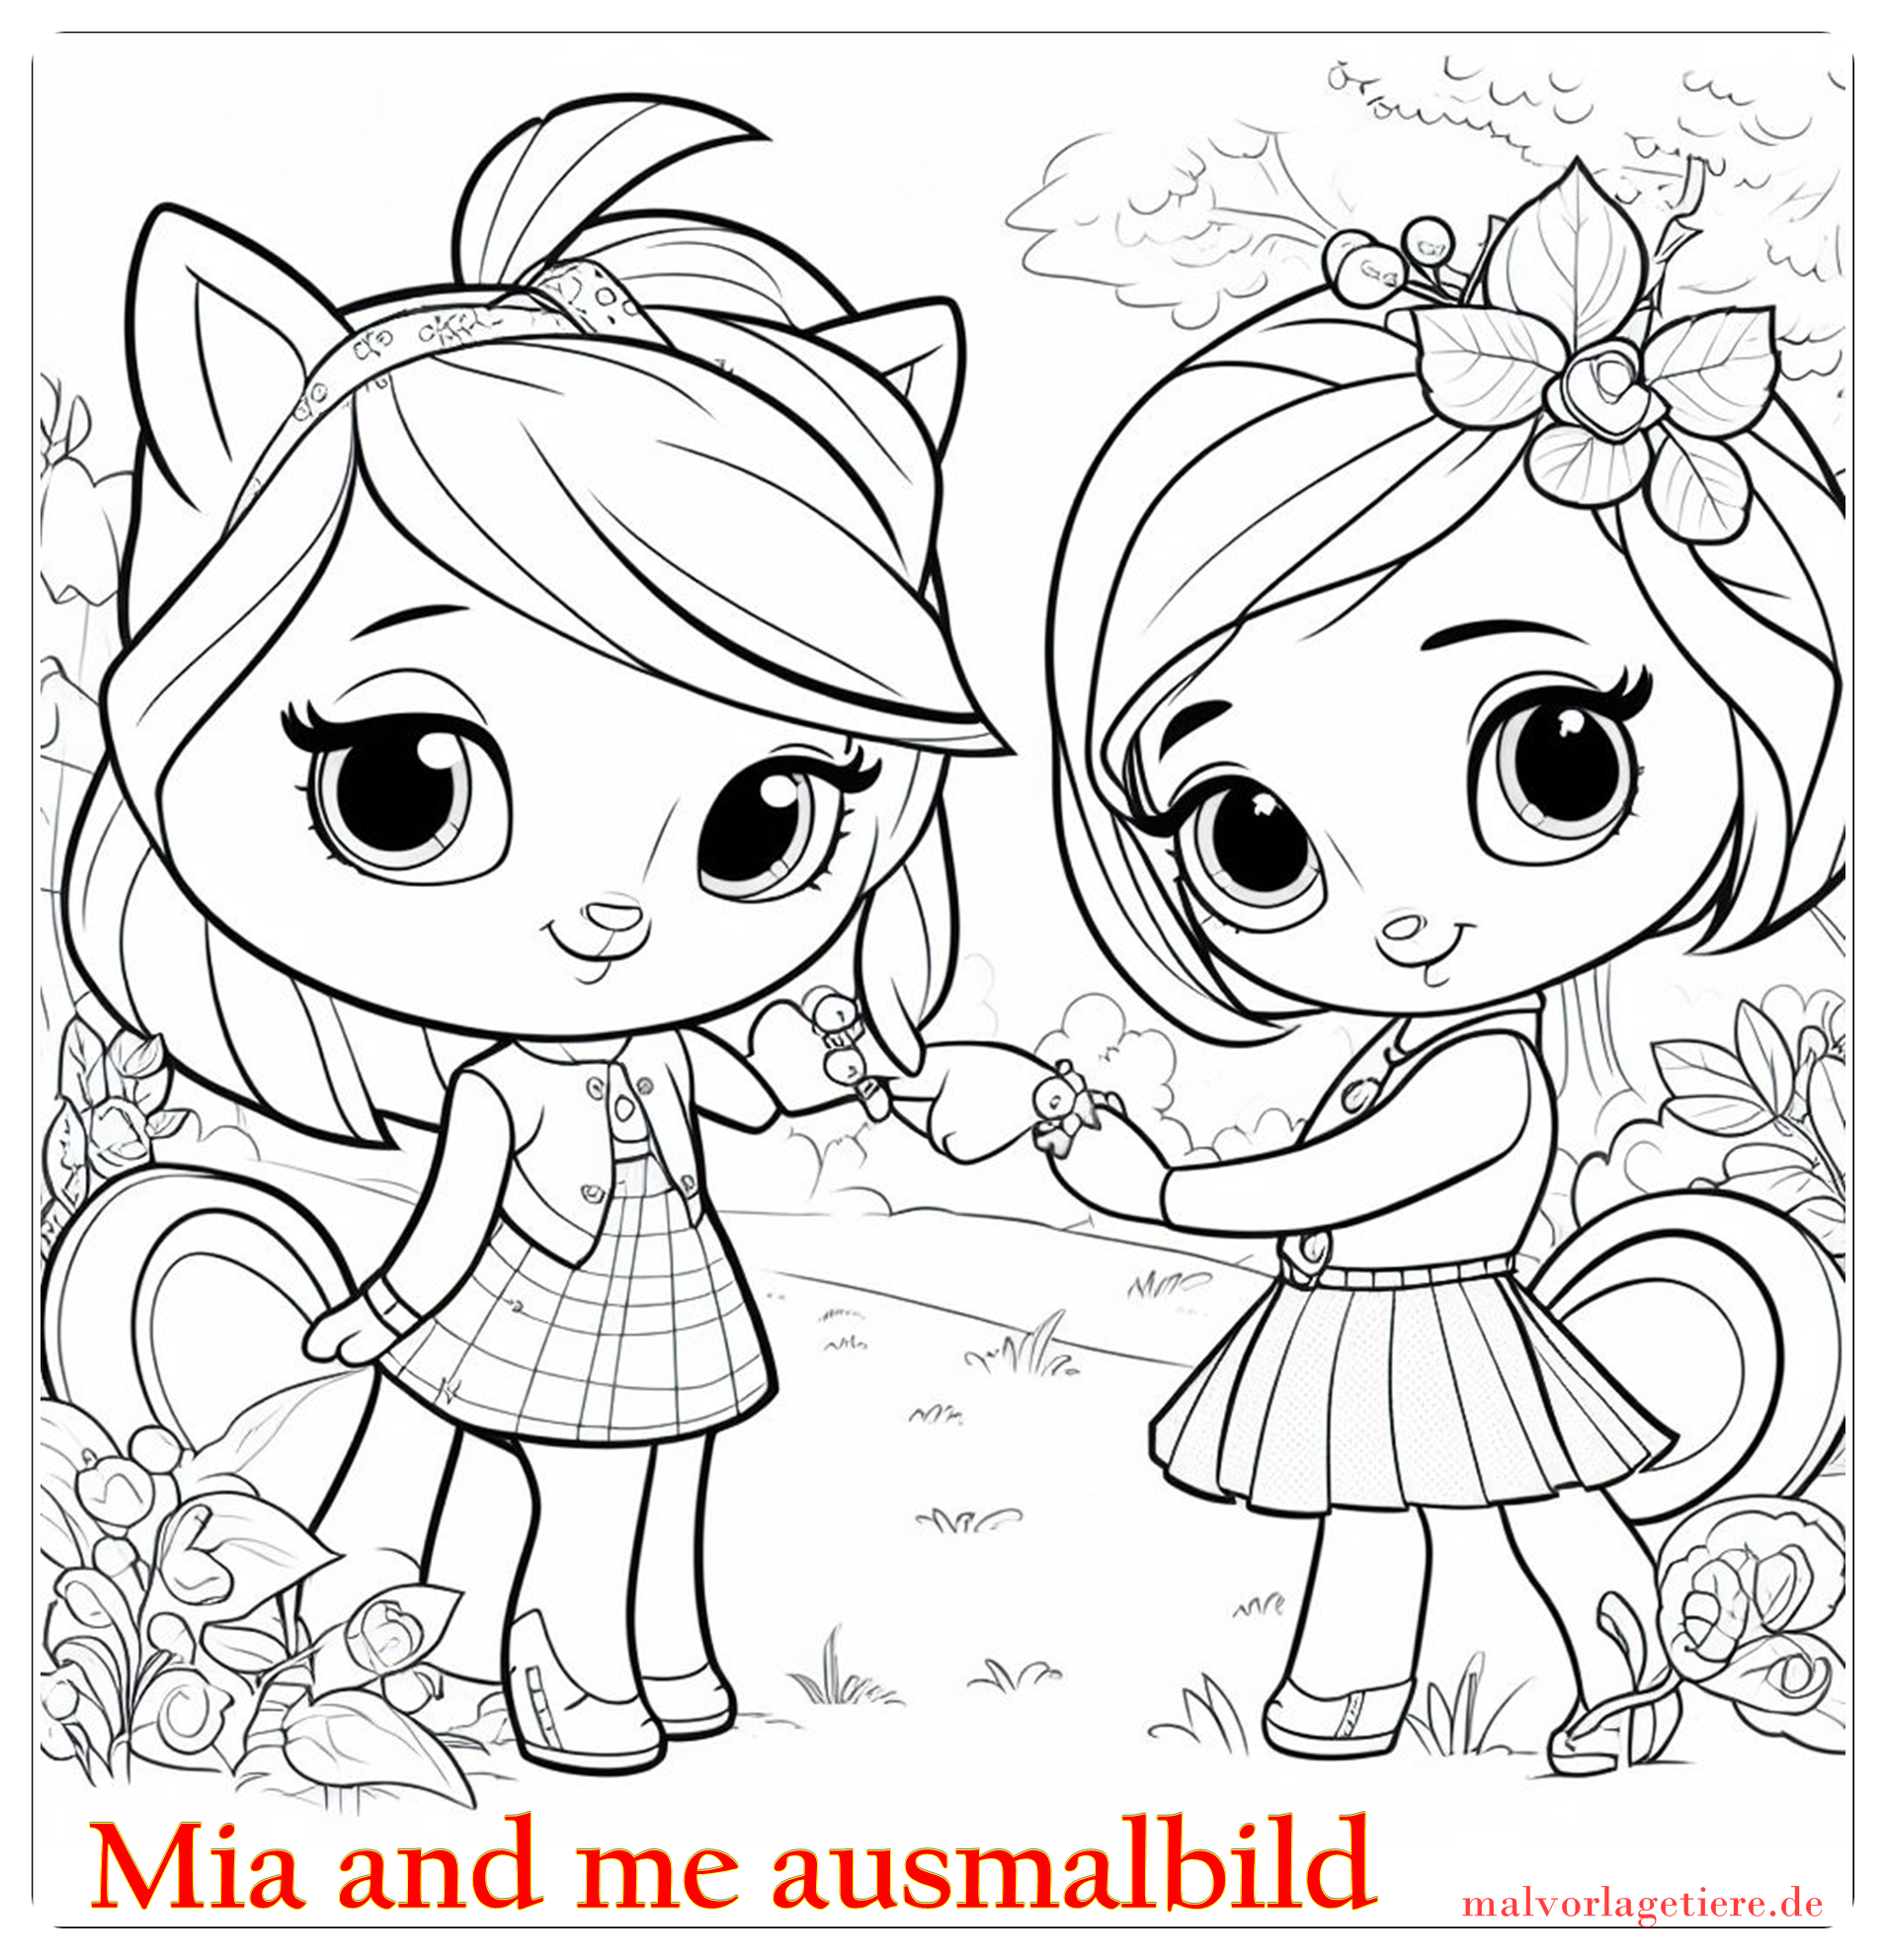 mia and me ausmalbild 03 by malvorlagetiere